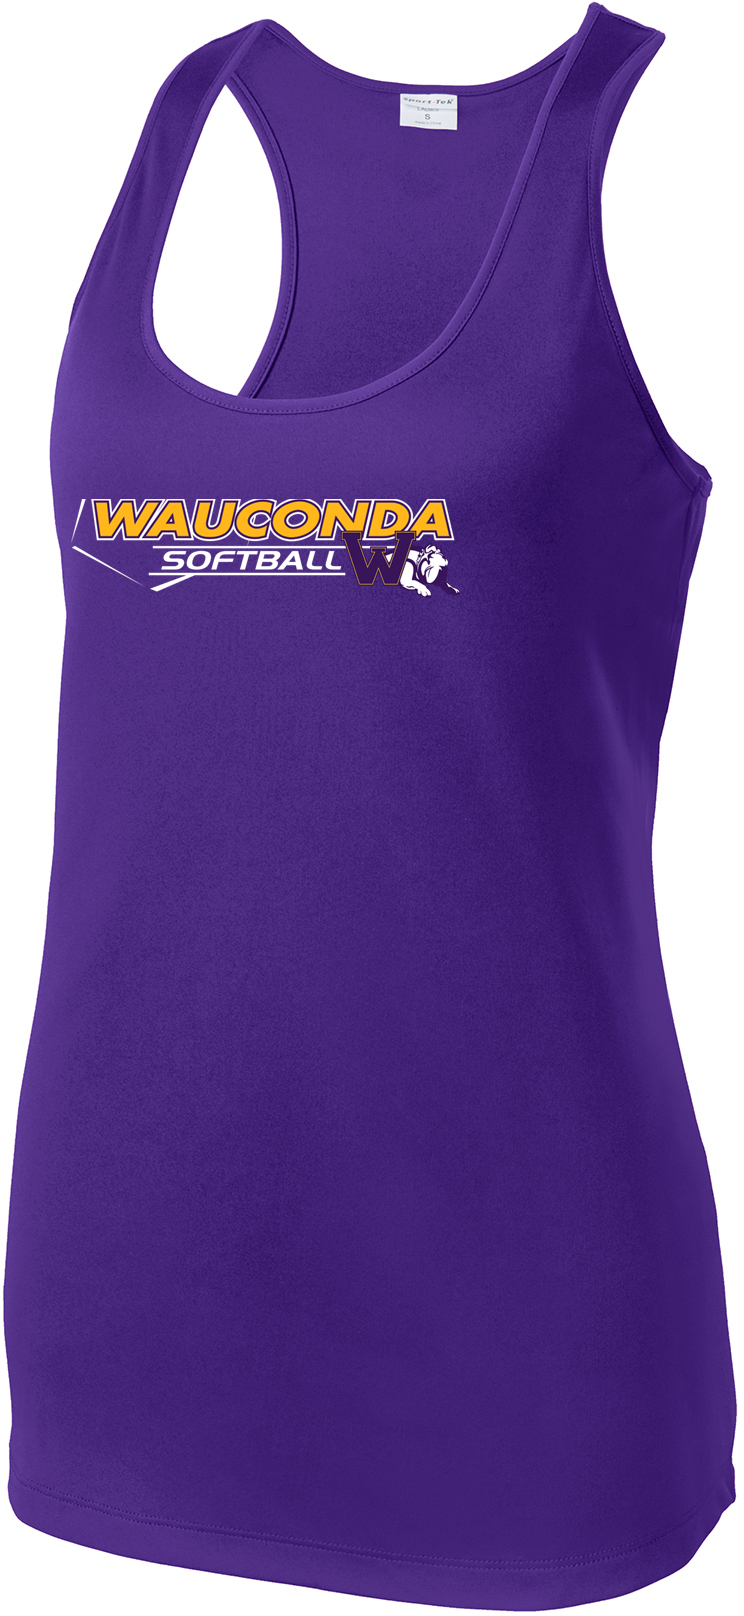 Wauconda Softball Racerback Tank